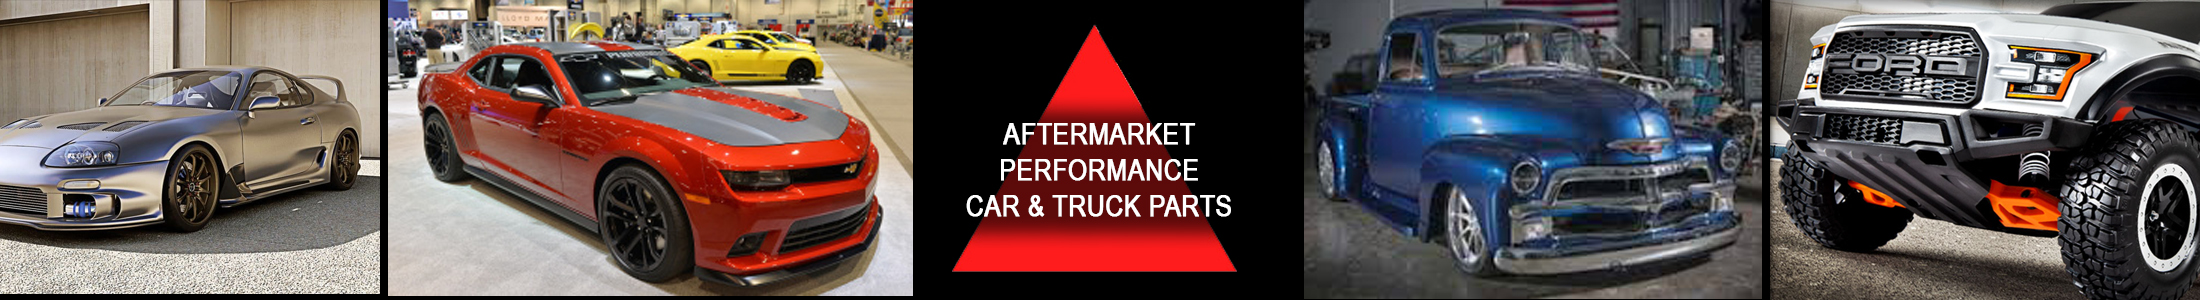 banner_performance_auto2